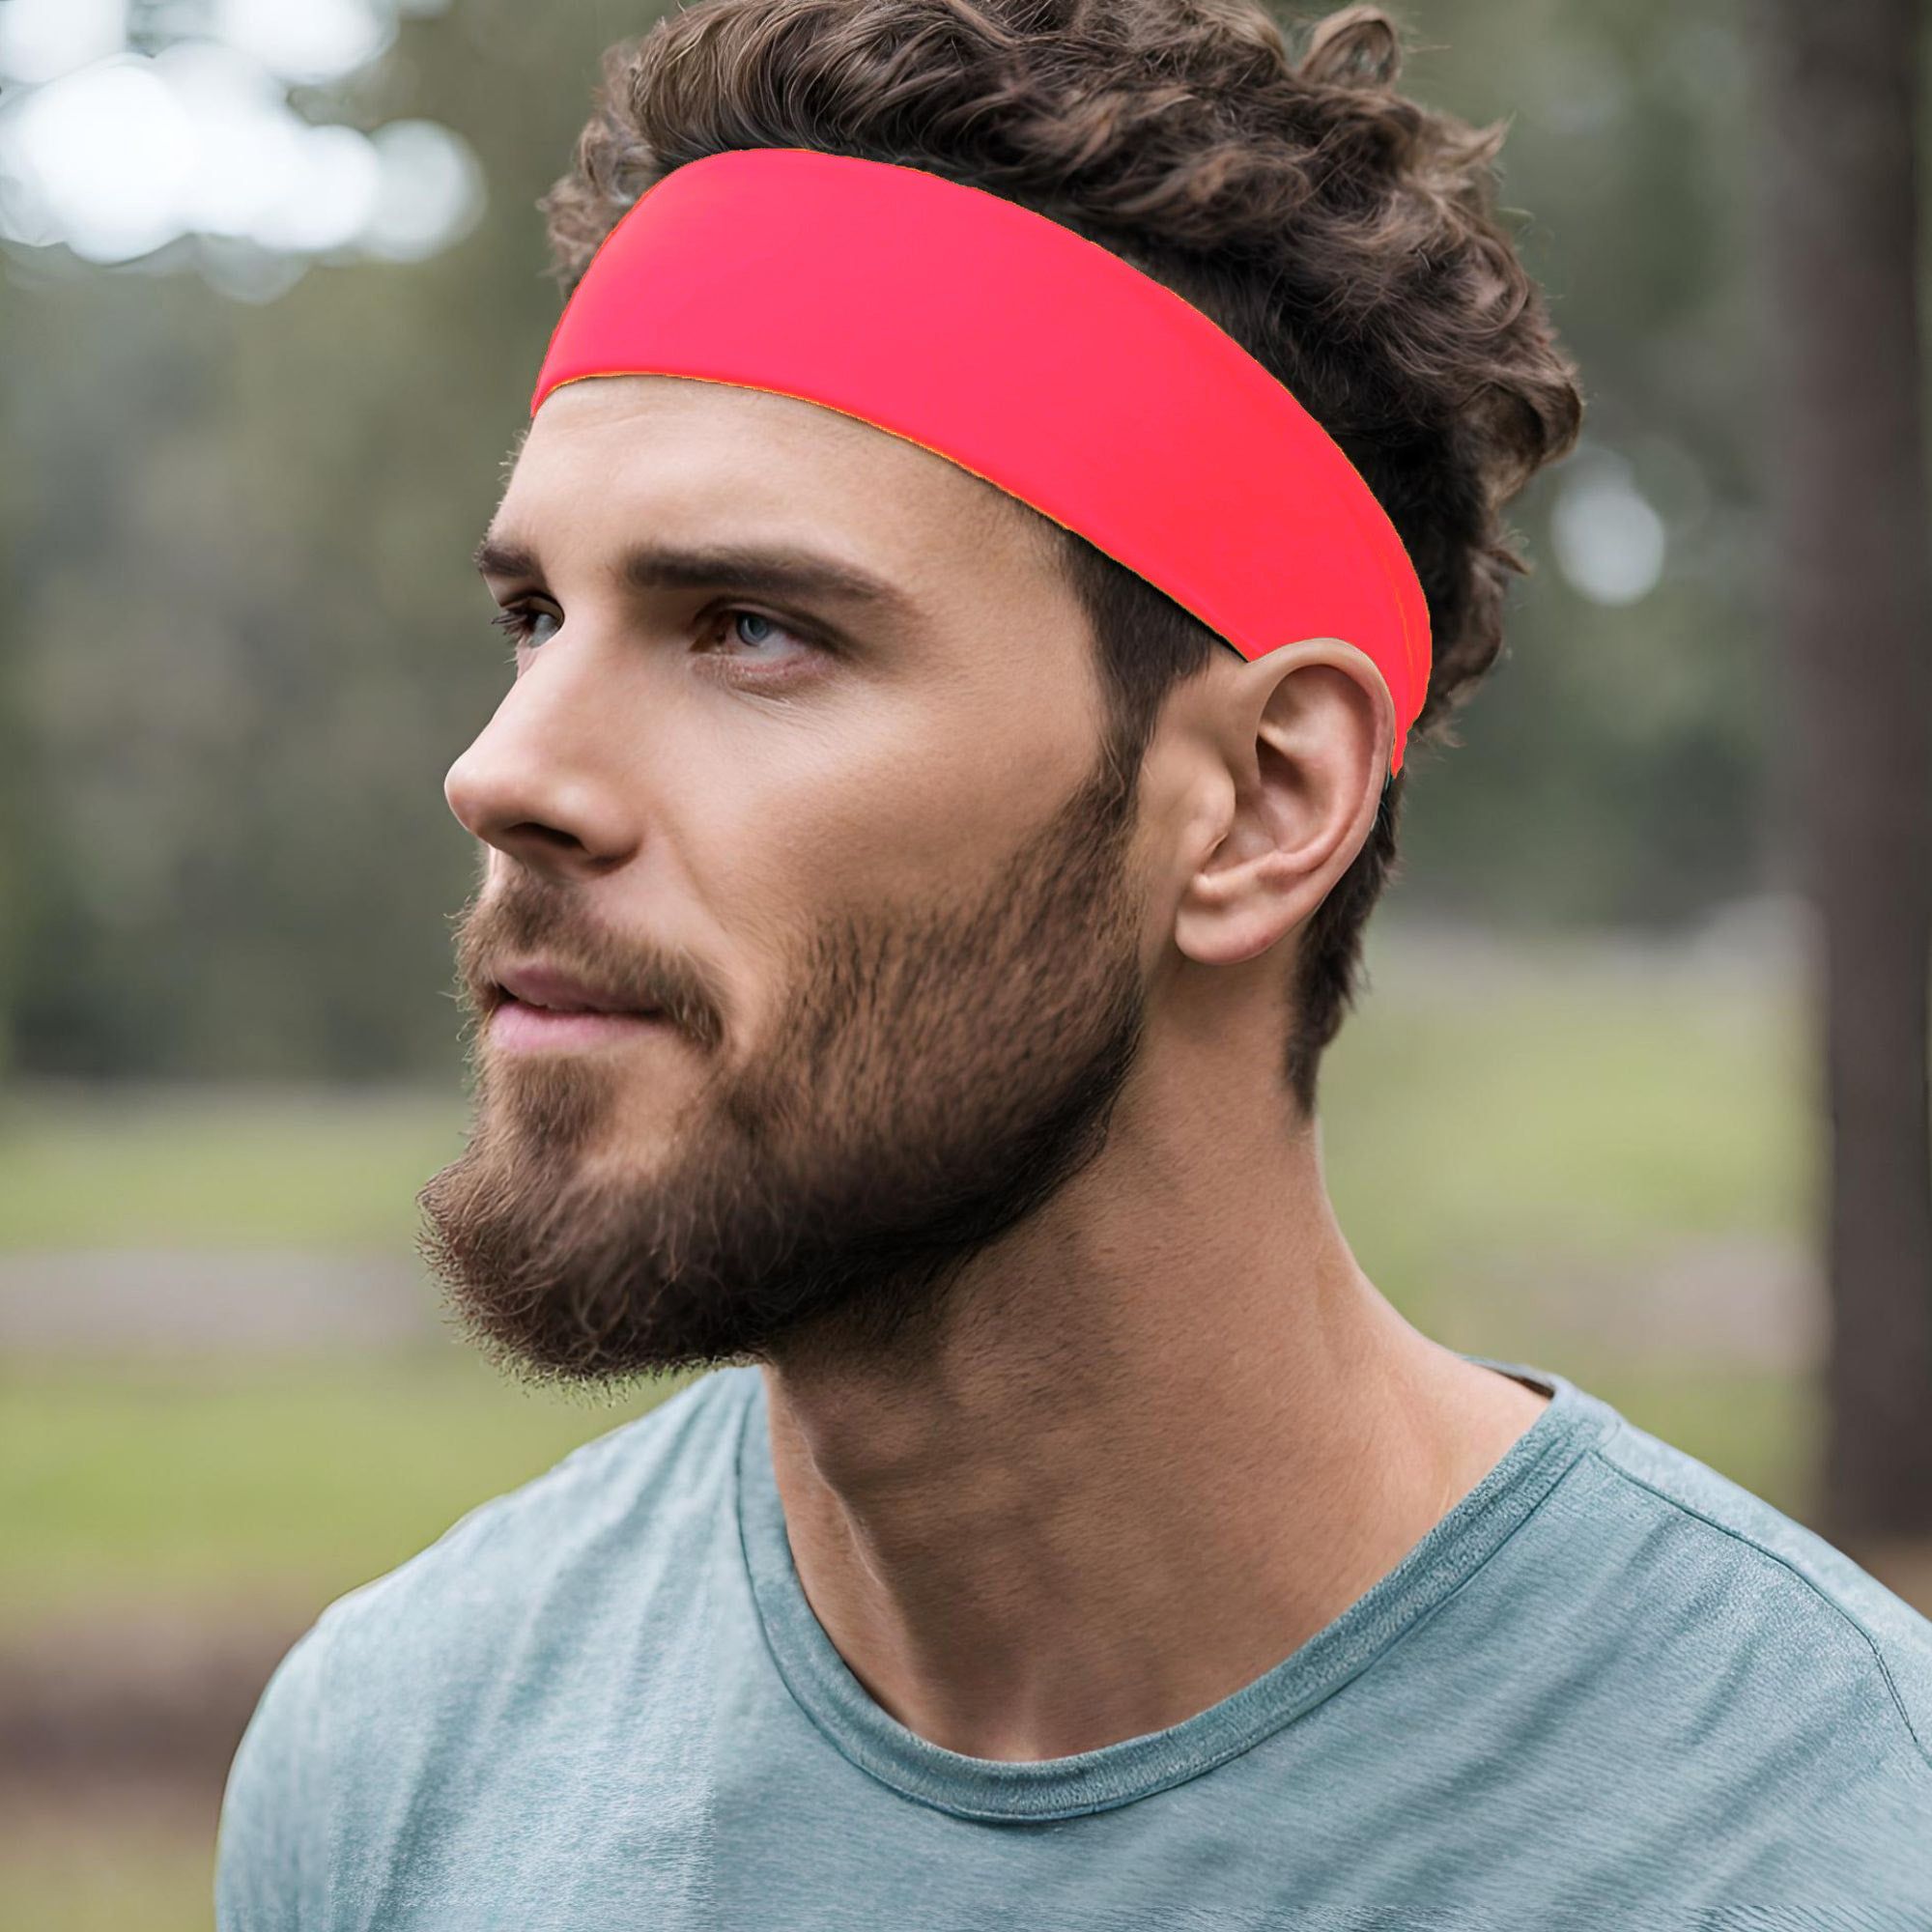 Neon Hot Pink Spandex Fabric Elastic Headband - PINK RIBBON